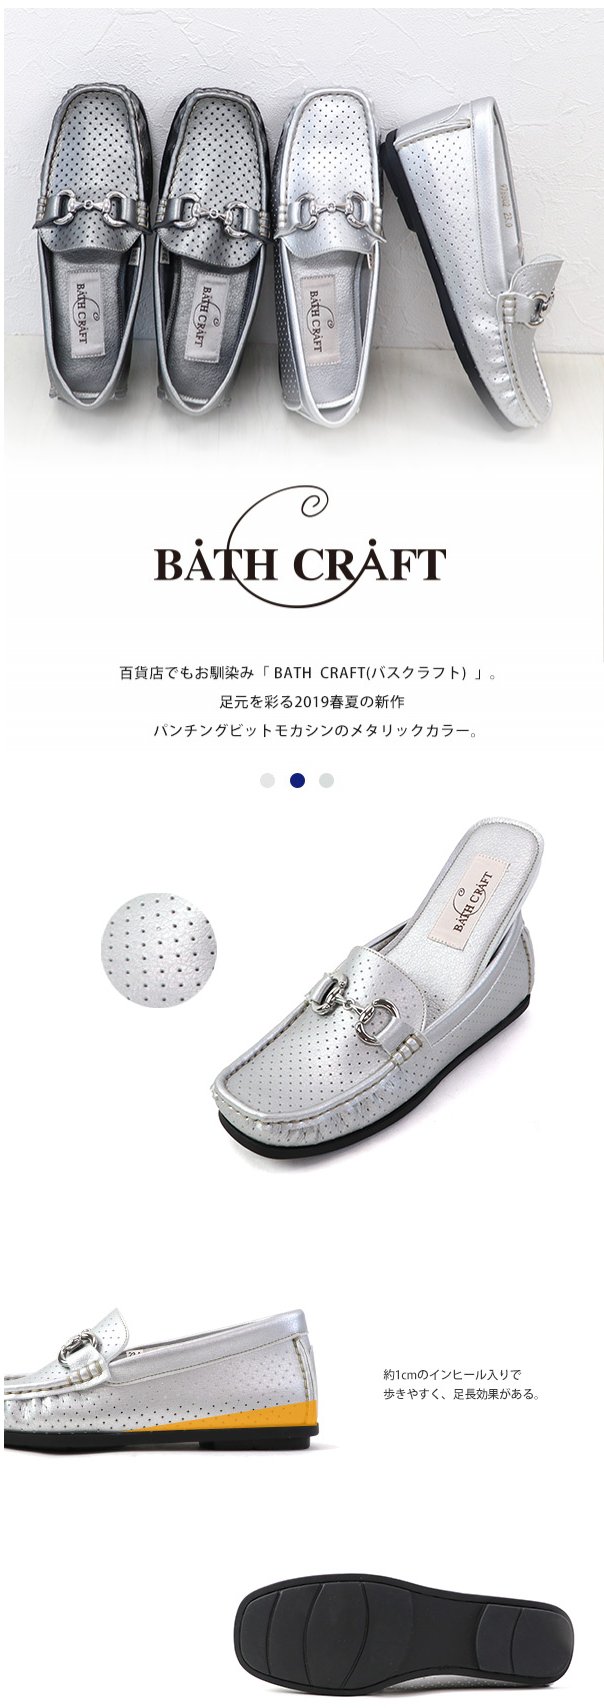 No.978802 バスクラフト メタリック パンチング ビットモカシン BATH CRAFT(バスクラフト) 婦人靴通販 バスオンラインショップ